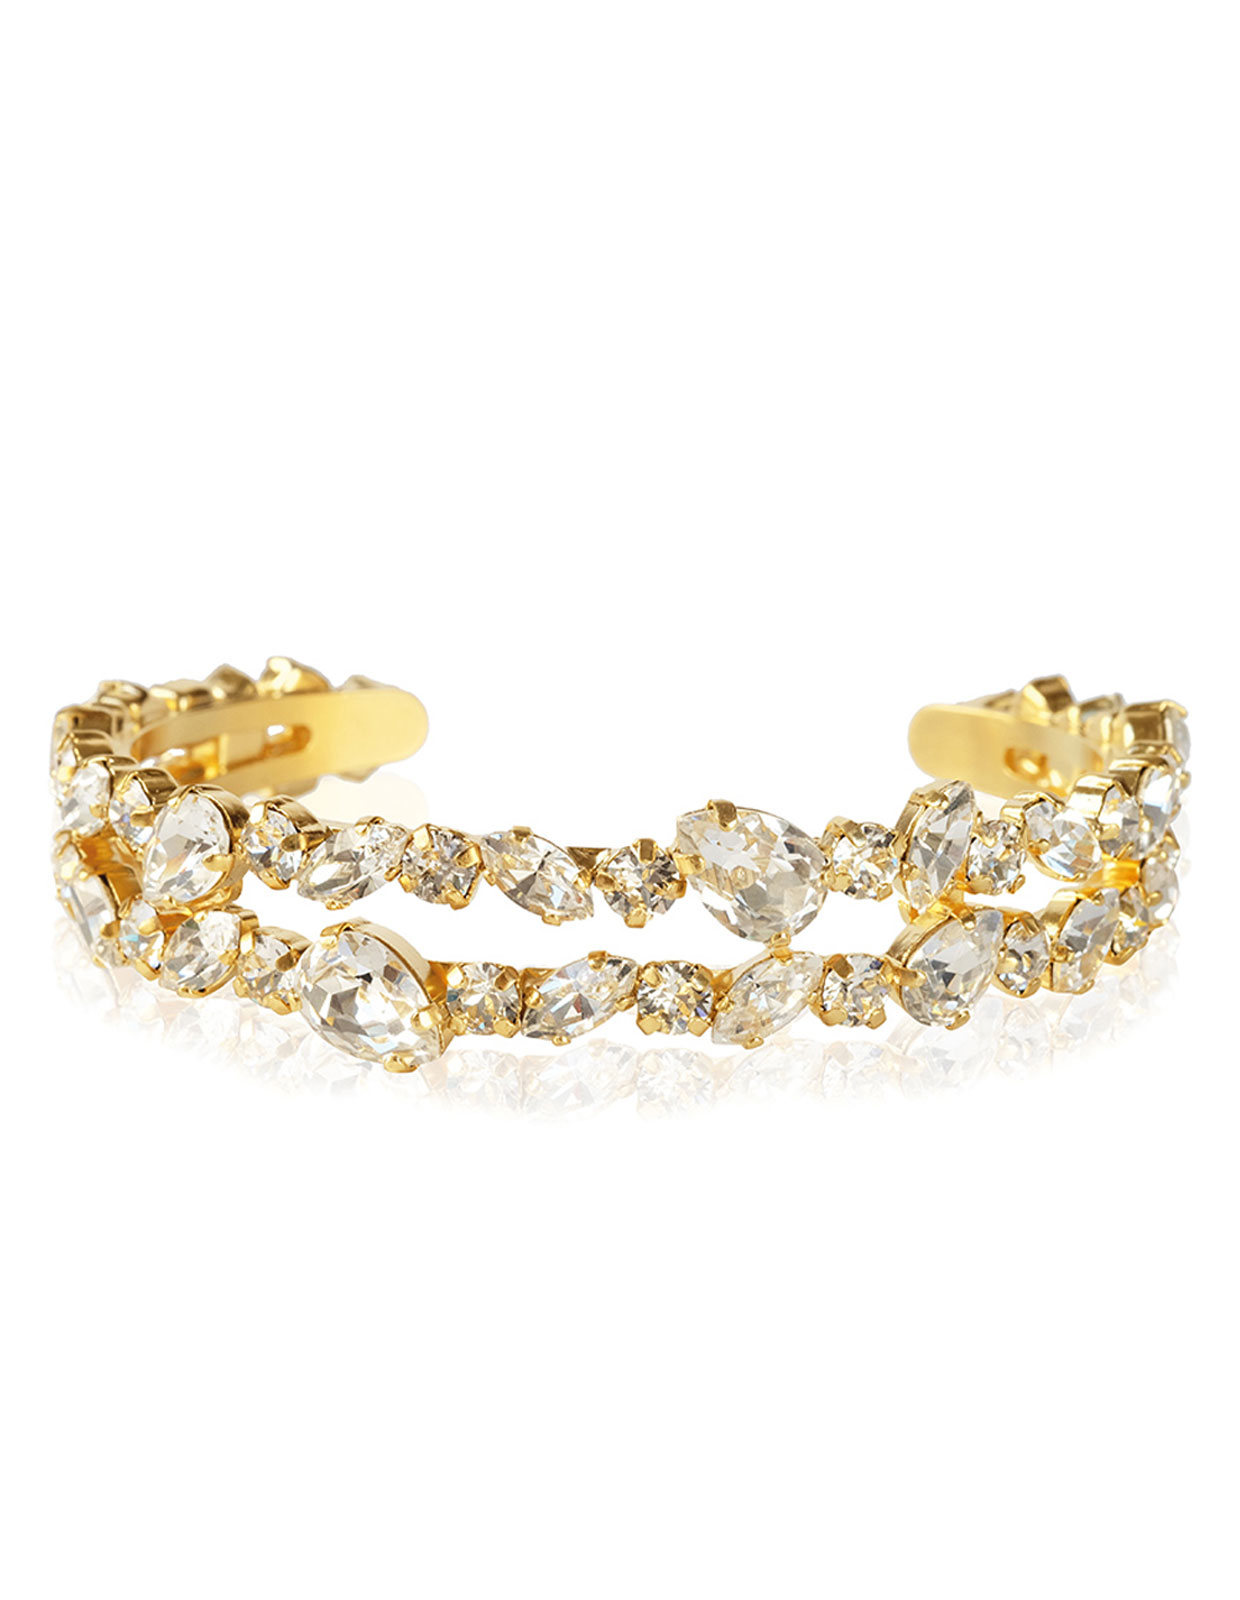 Gabriella Bangle Bracelet Gold/Crystal